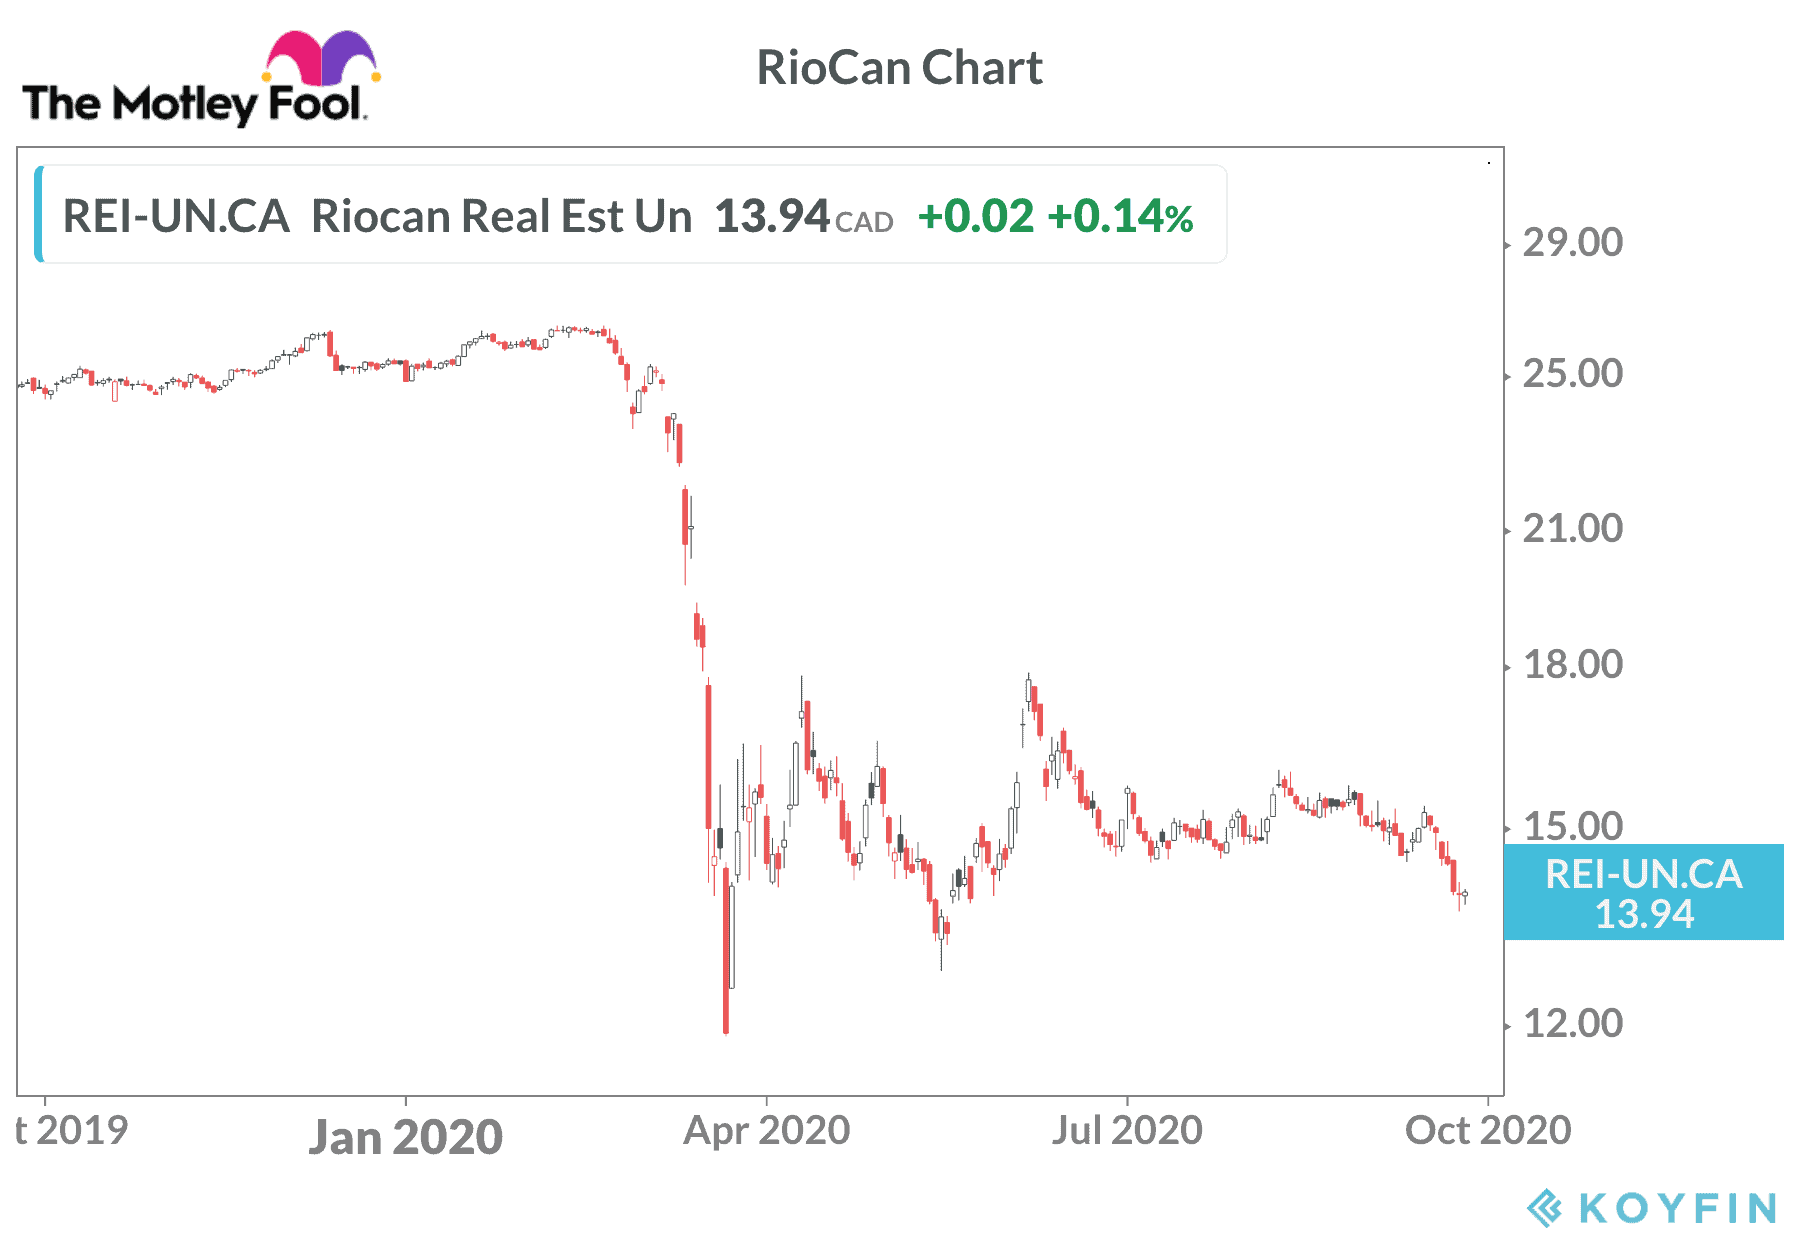 RioCan stock price